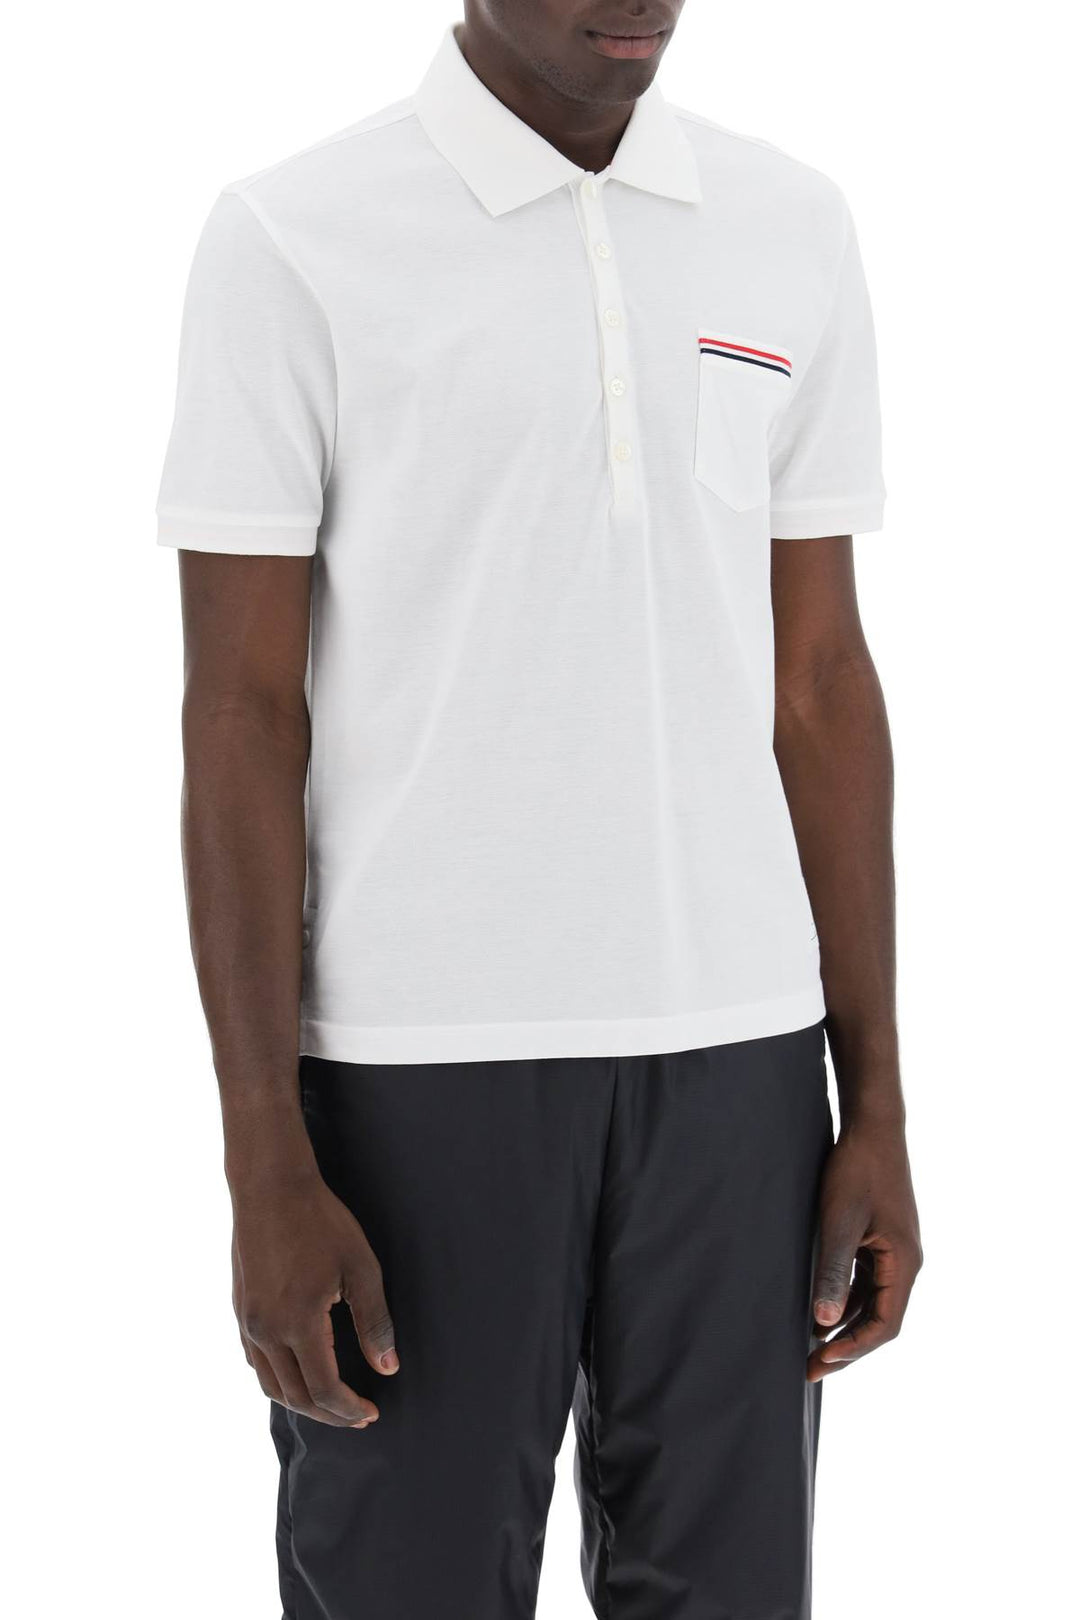 Thom Browne Mercerized Cotton Polo Shirt   White